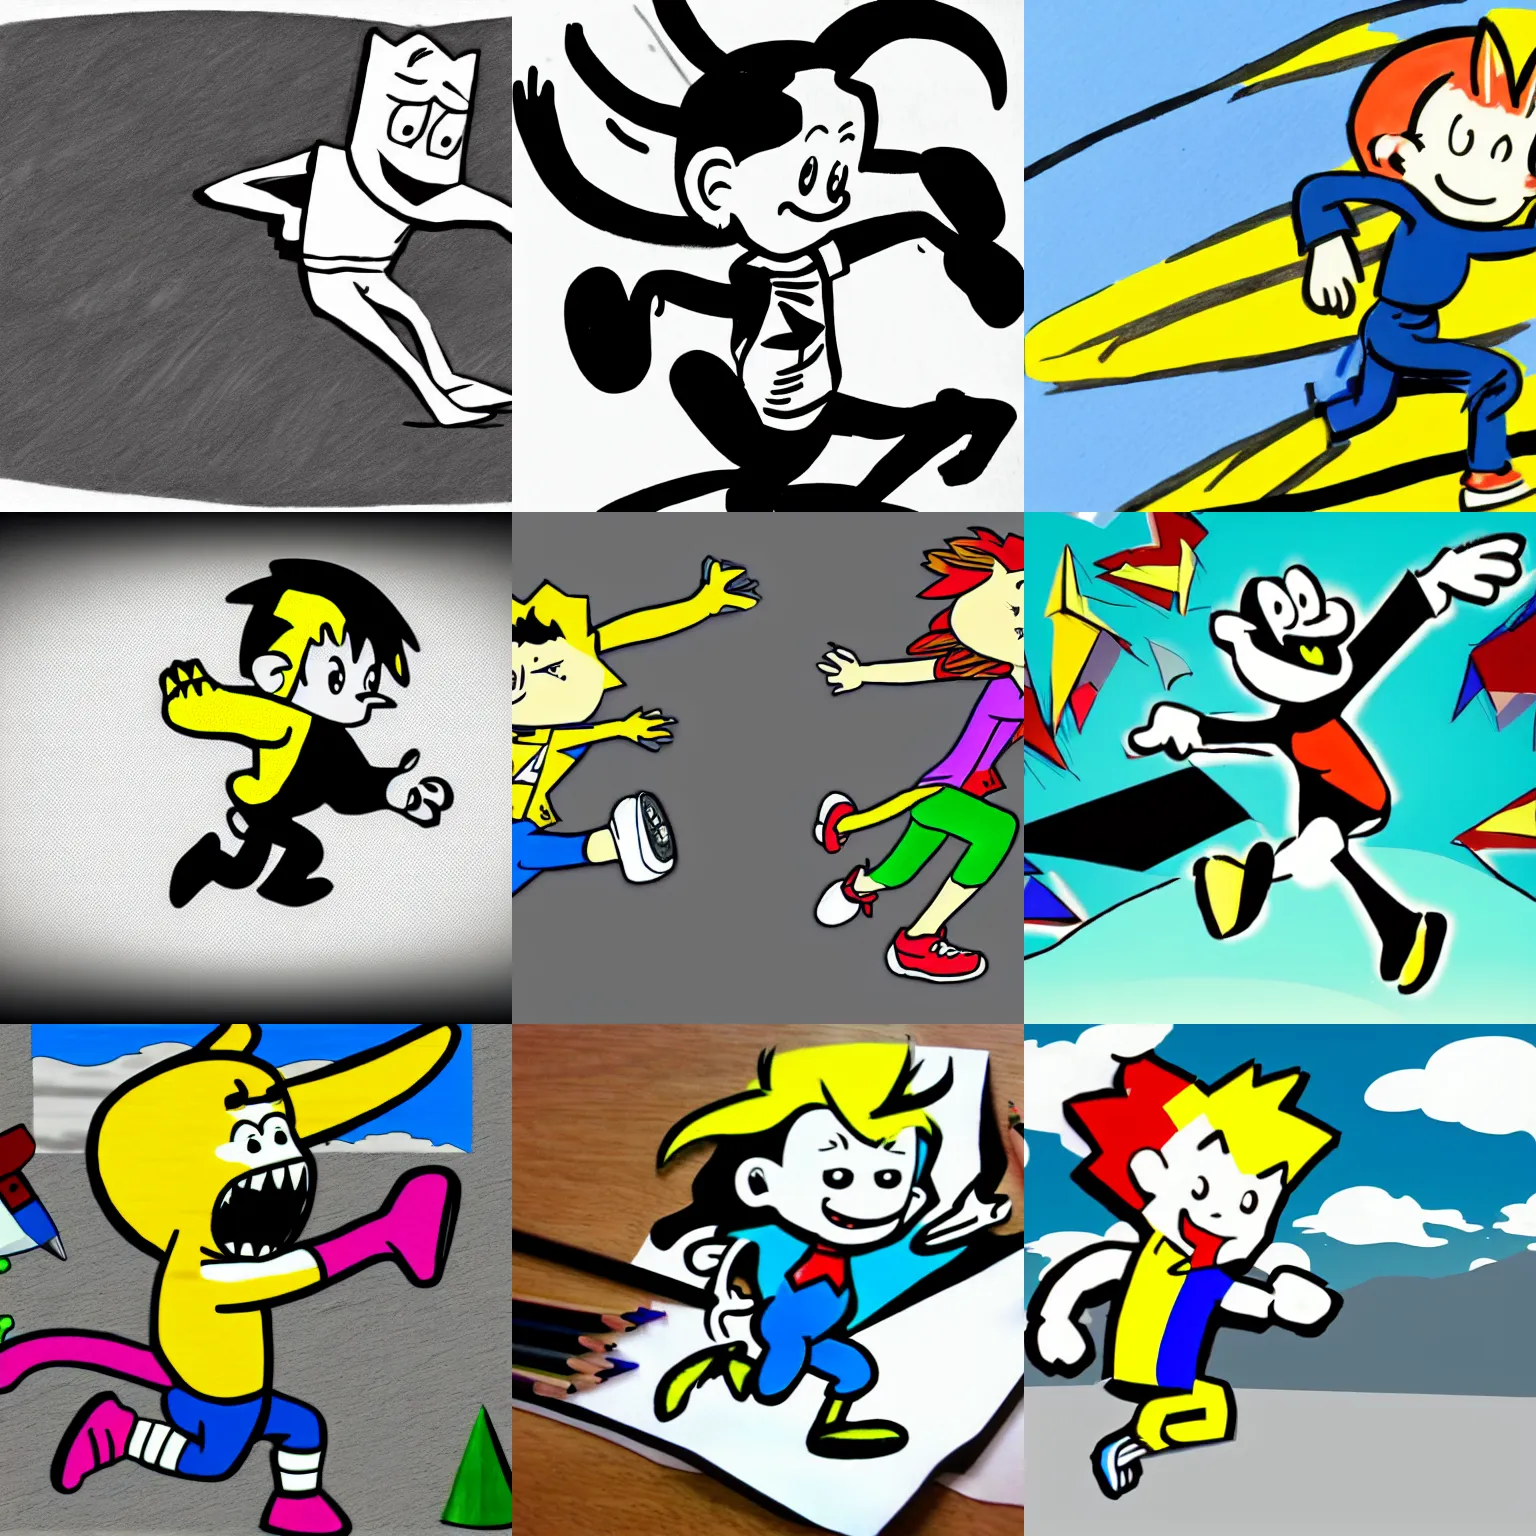 Prompt: a drawing of a cartoon character running, a child's drawing by lichtenstein, deviantart contest winner, sots art, 2 d game art, rendered in maya, masterpiece